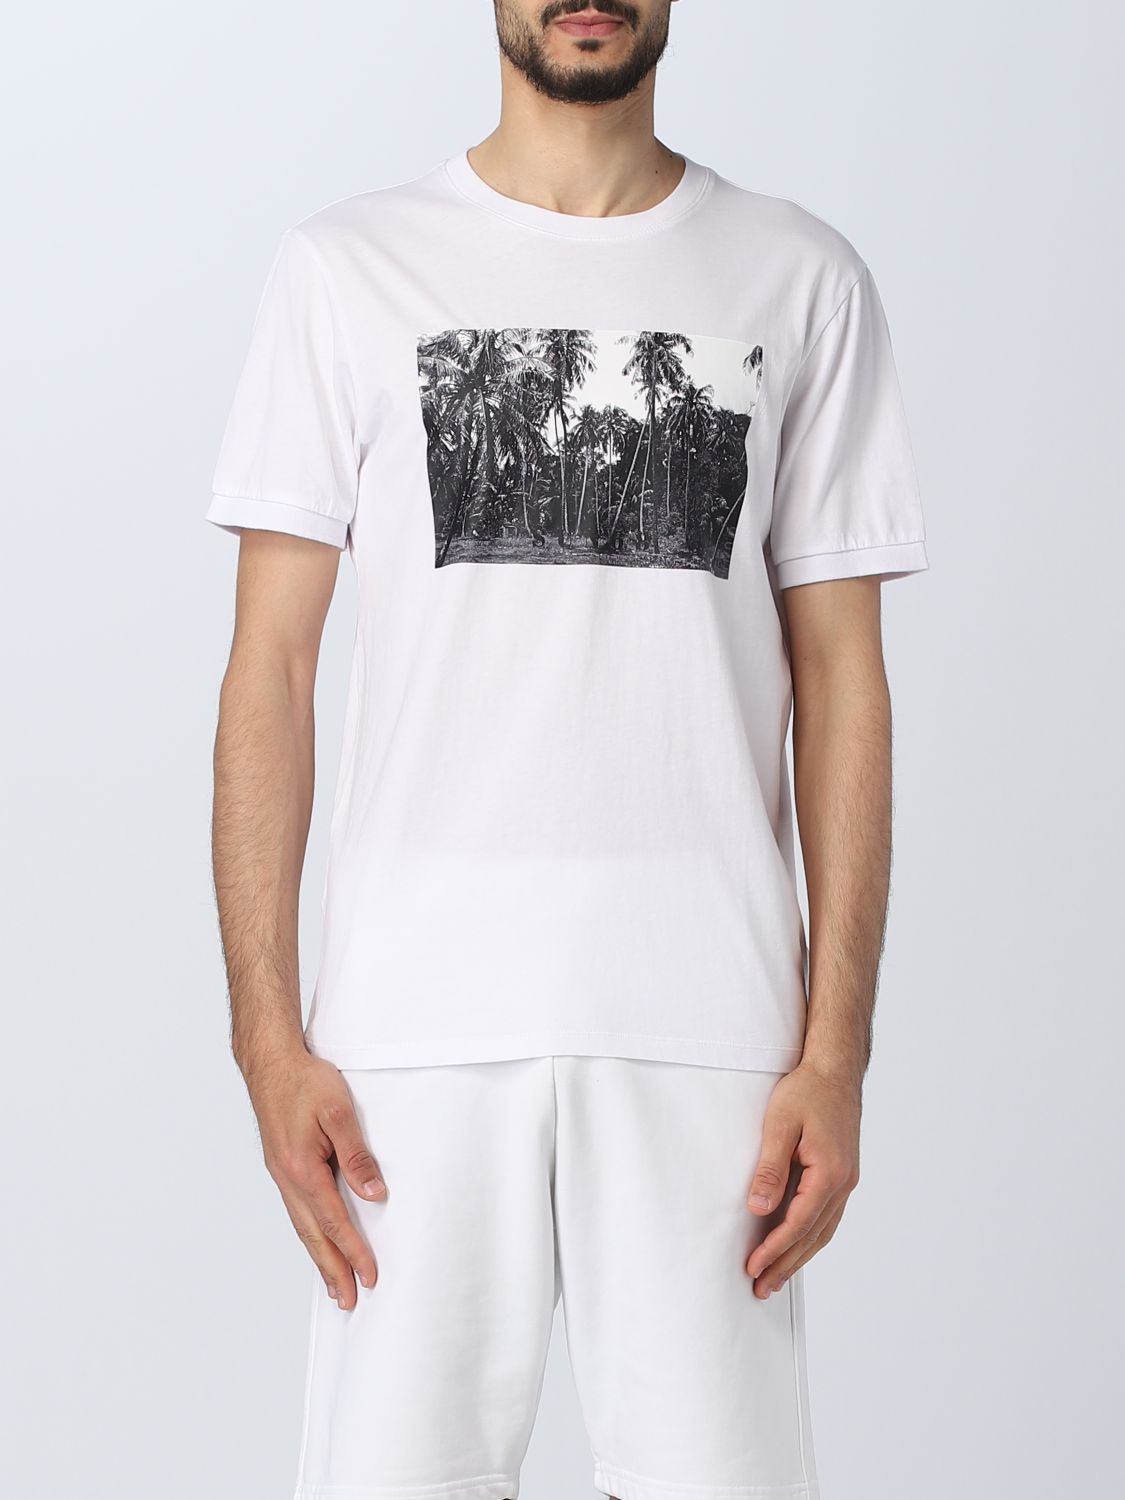 SUN 68: t-shirt for man - White | Sun 68 t-shirt T33112 online on ...